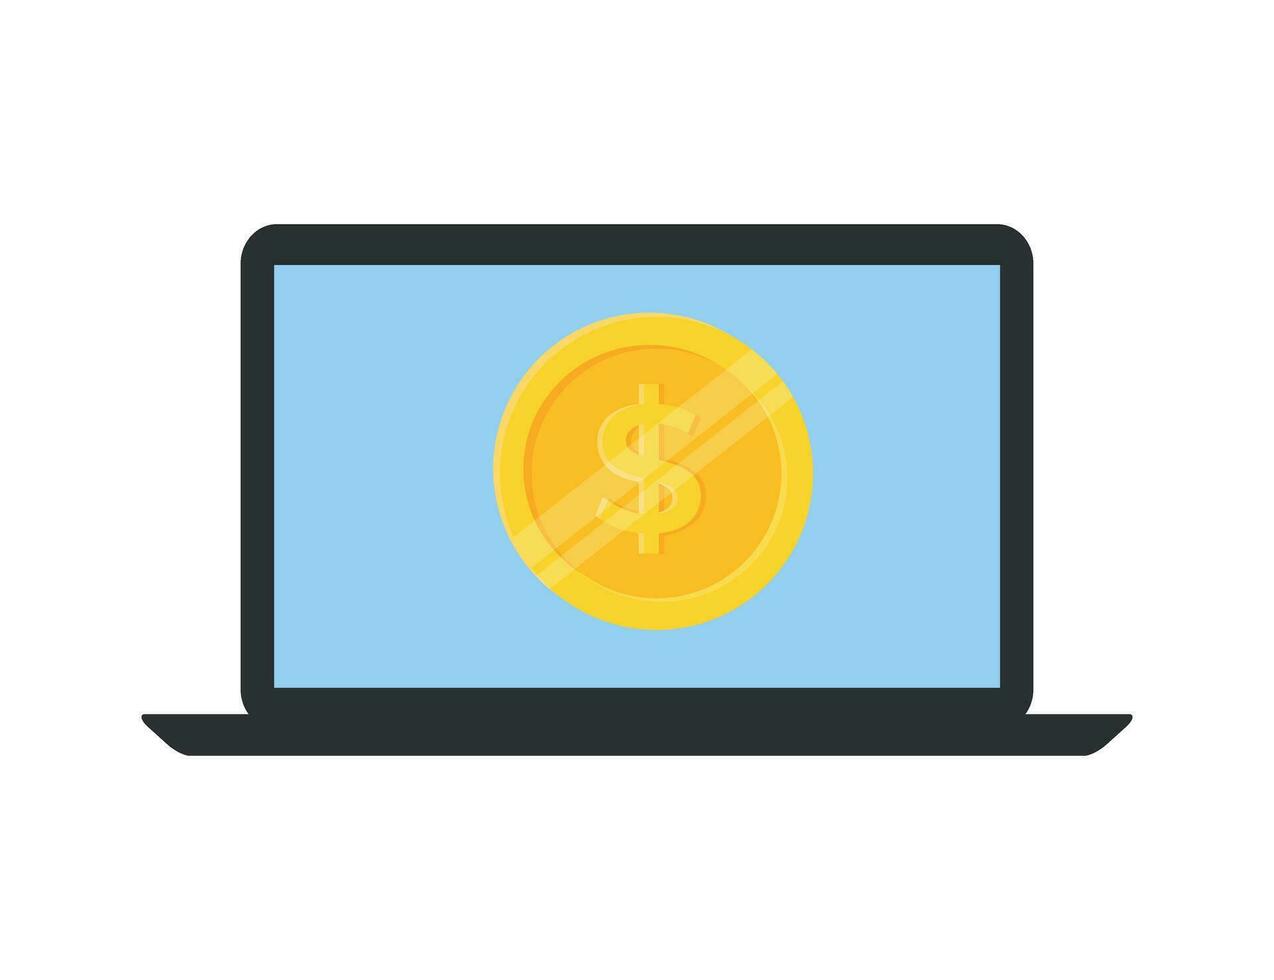 Gold coin on laptop screen vector